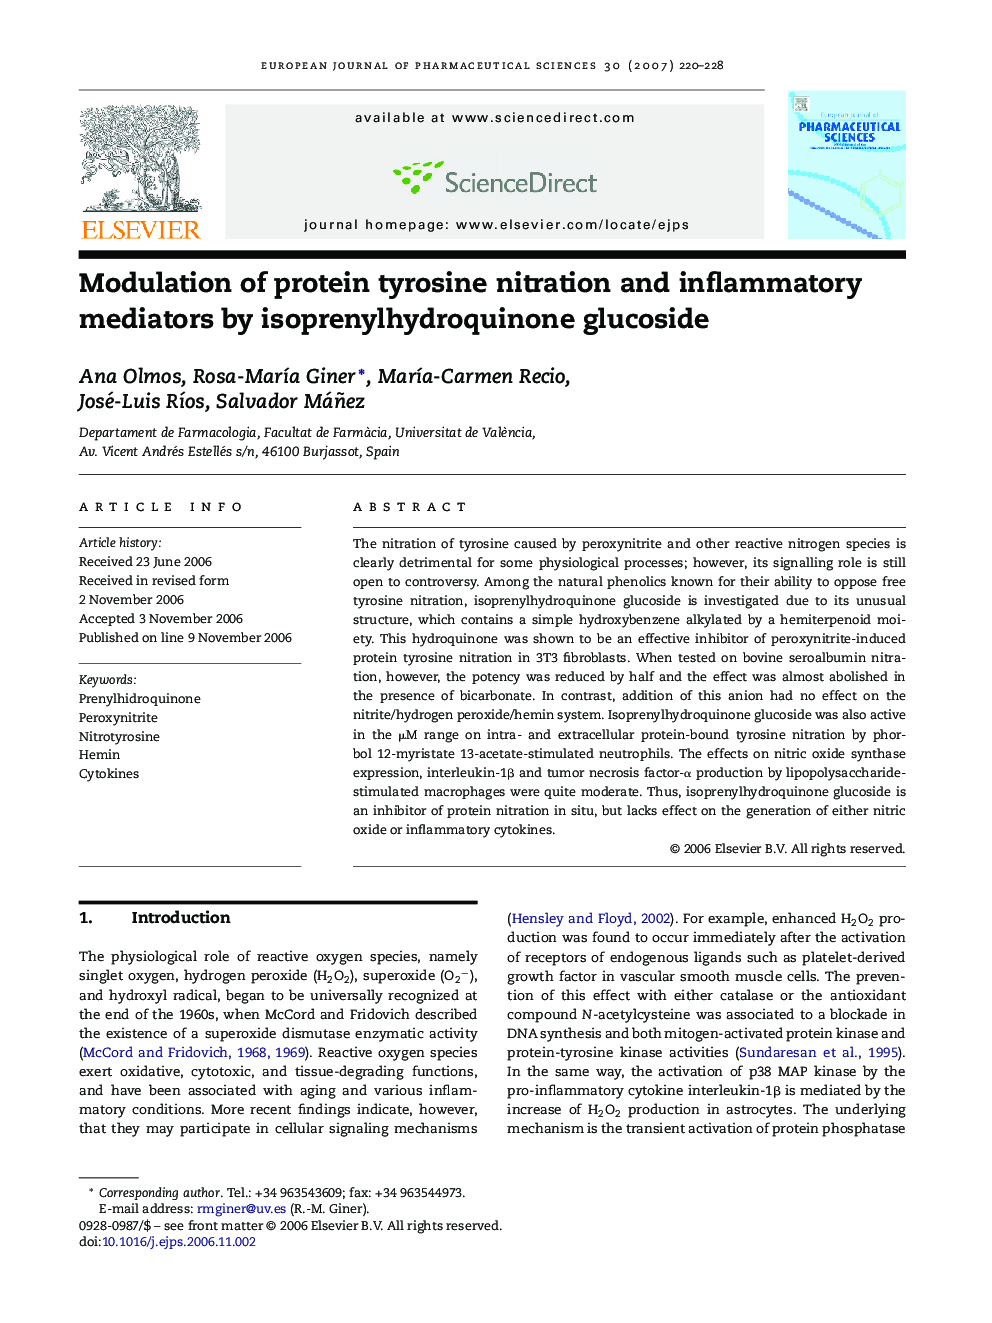 Modulation of protein tyrosine nitration and inflammatory mediators by isoprenylhydroquinone glucoside